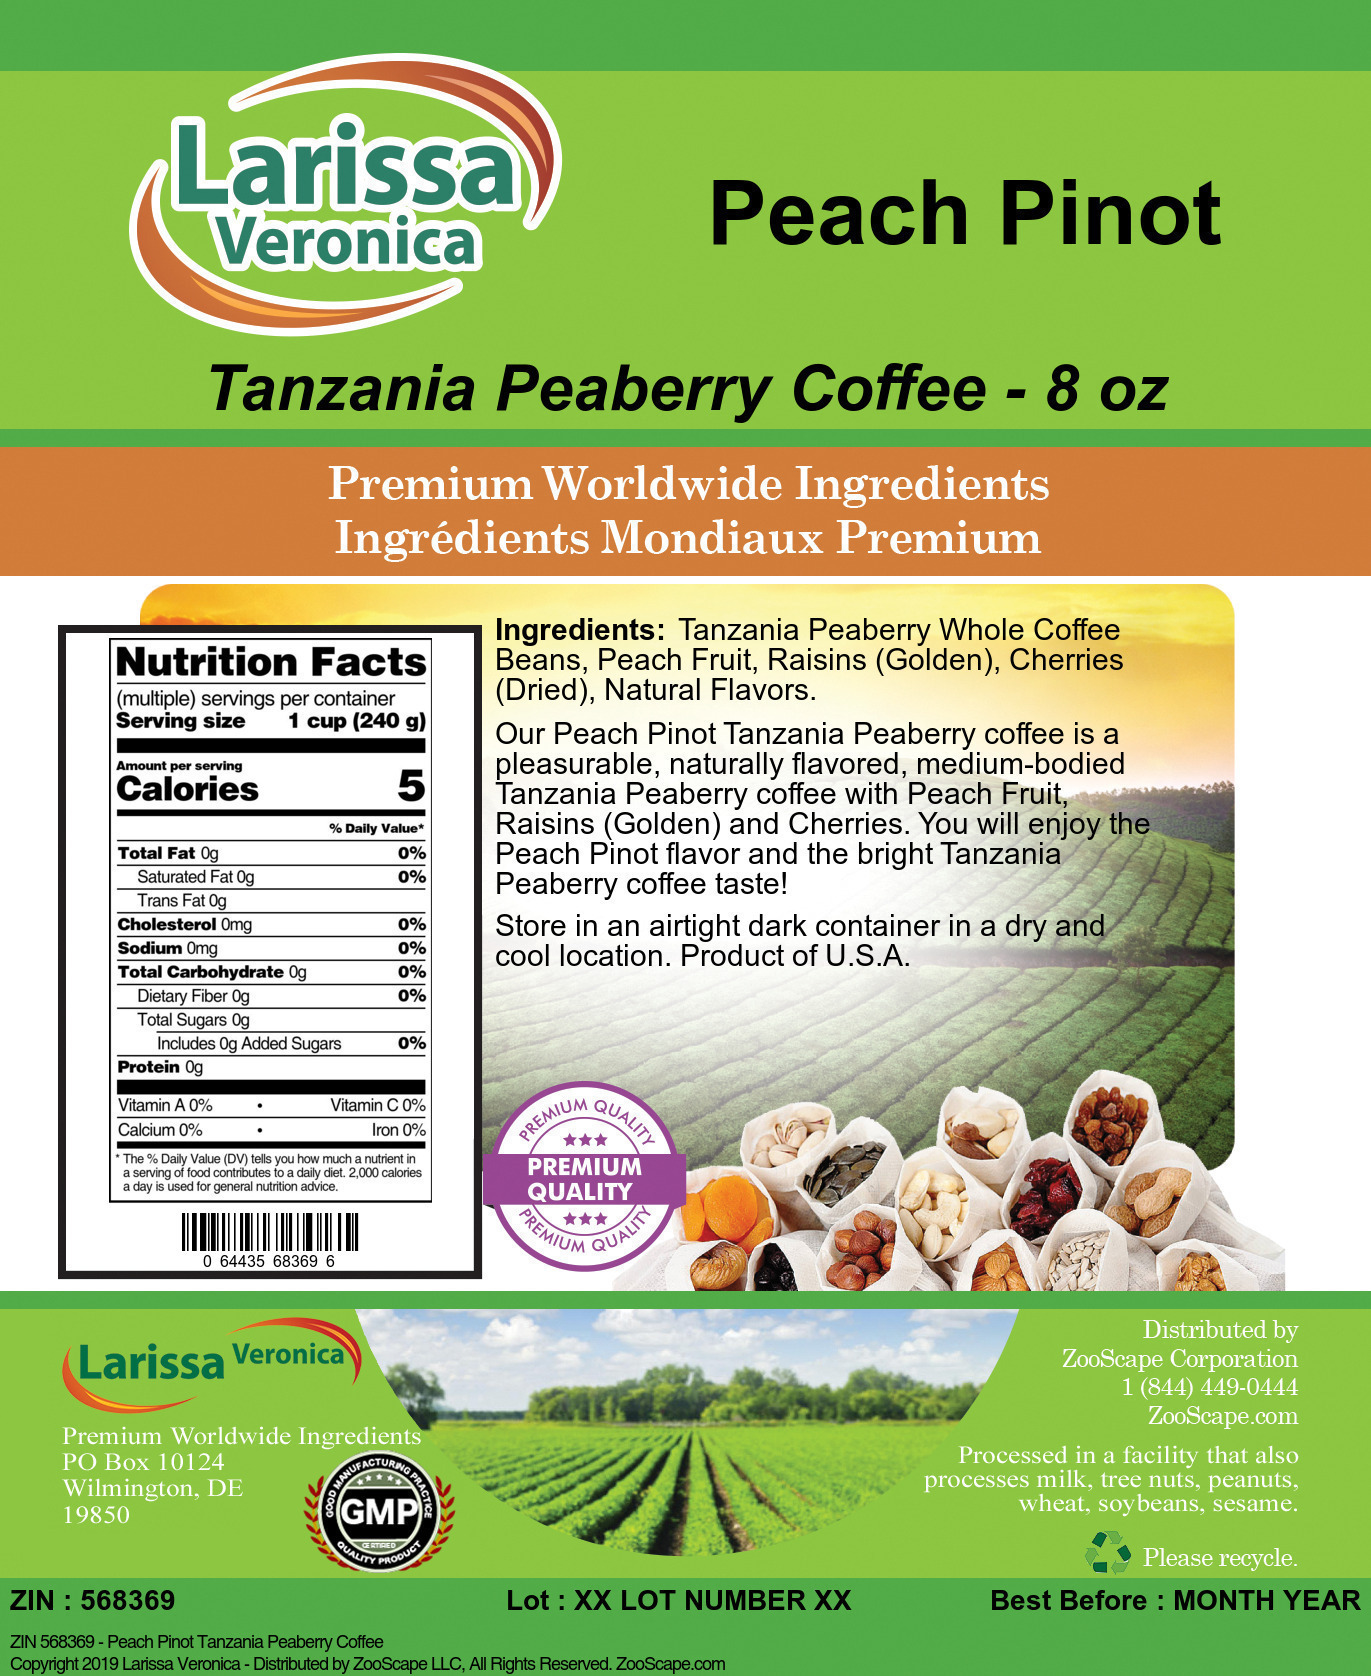 Peach Pinot Tanzania Peaberry Coffee - Label